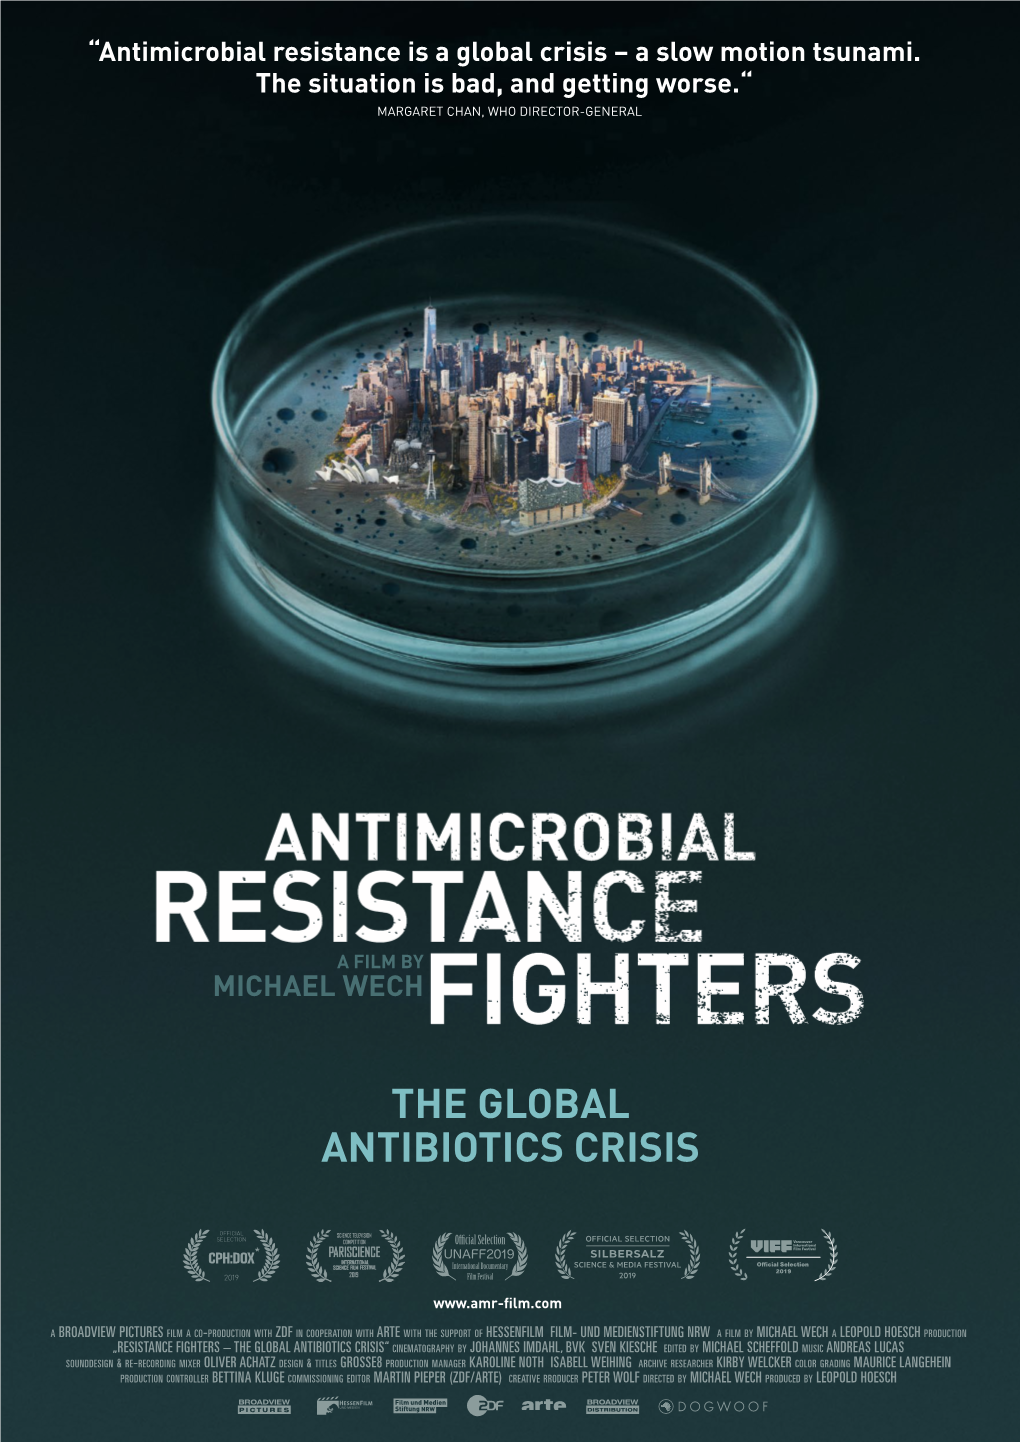 The Global Antibiotics Crisis